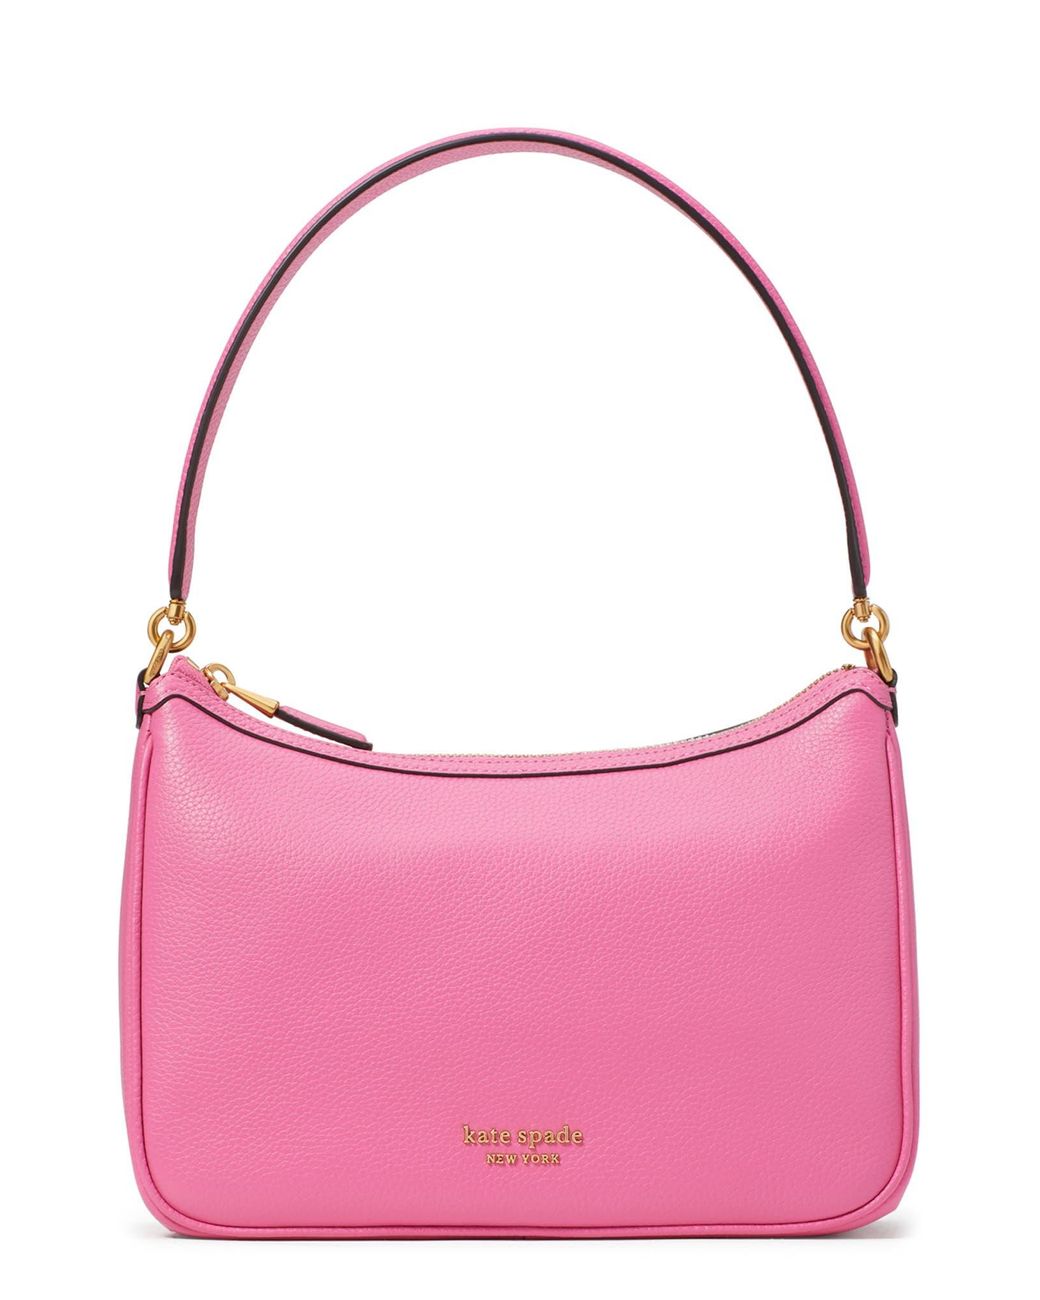 Kate Spade New York Women's Bag - Pink